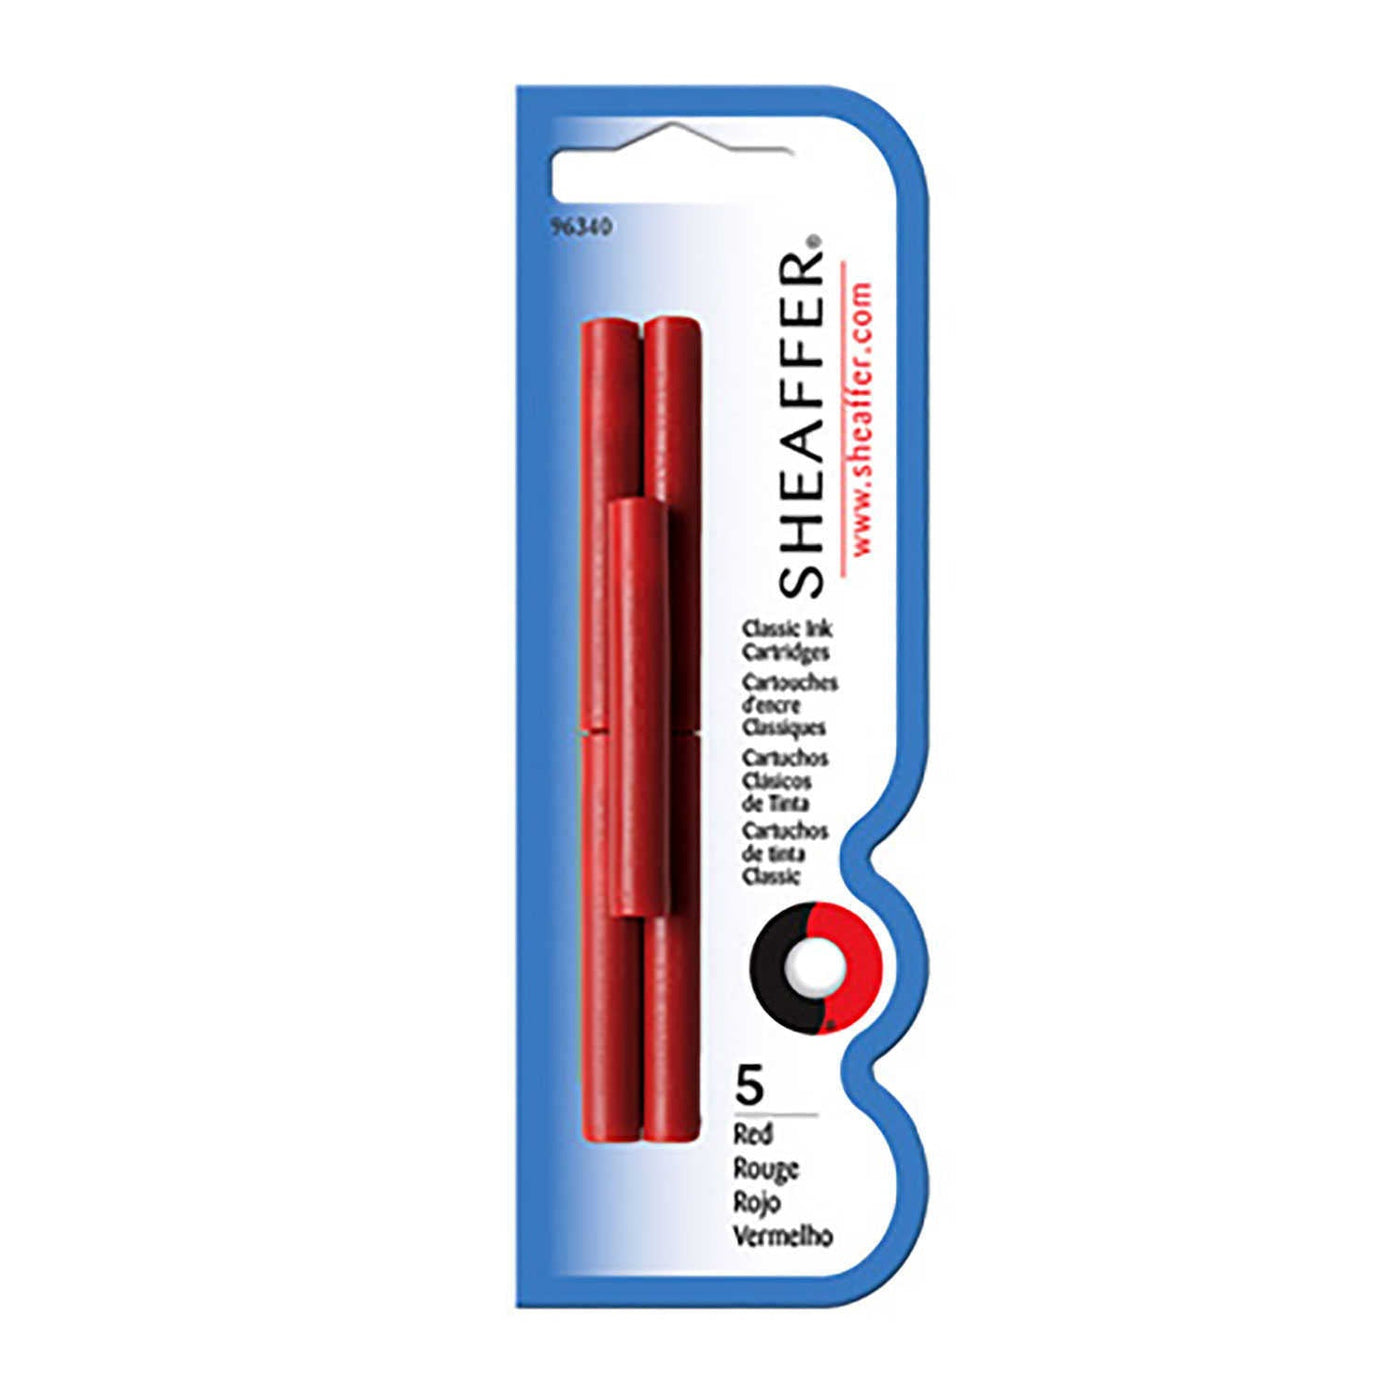 Sheaffer Skrip Ink Cartridge Red - Pack of 5